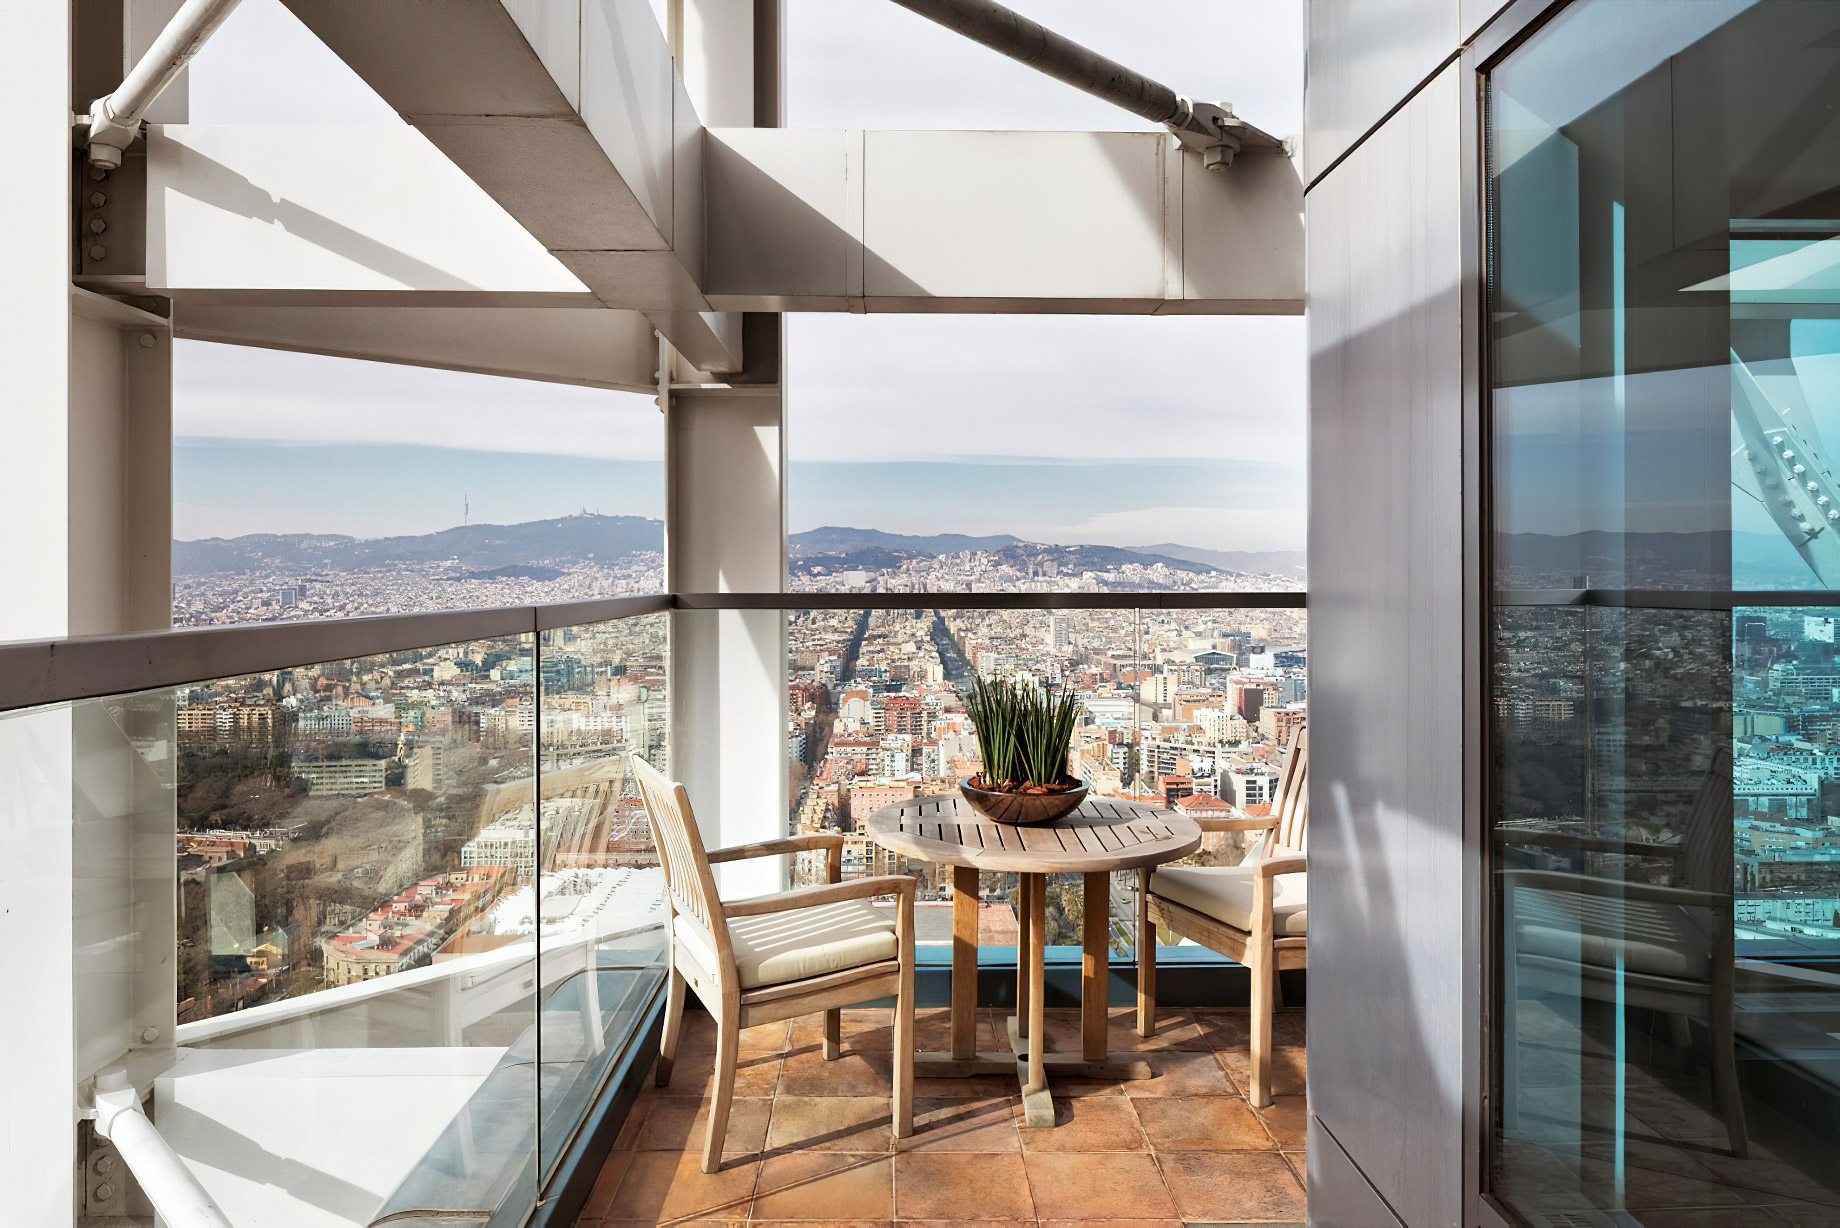 Hotel Arts Barcelona Ritz-Carlton – Barcelona, Spain – The Barcelona Penthouse Deck